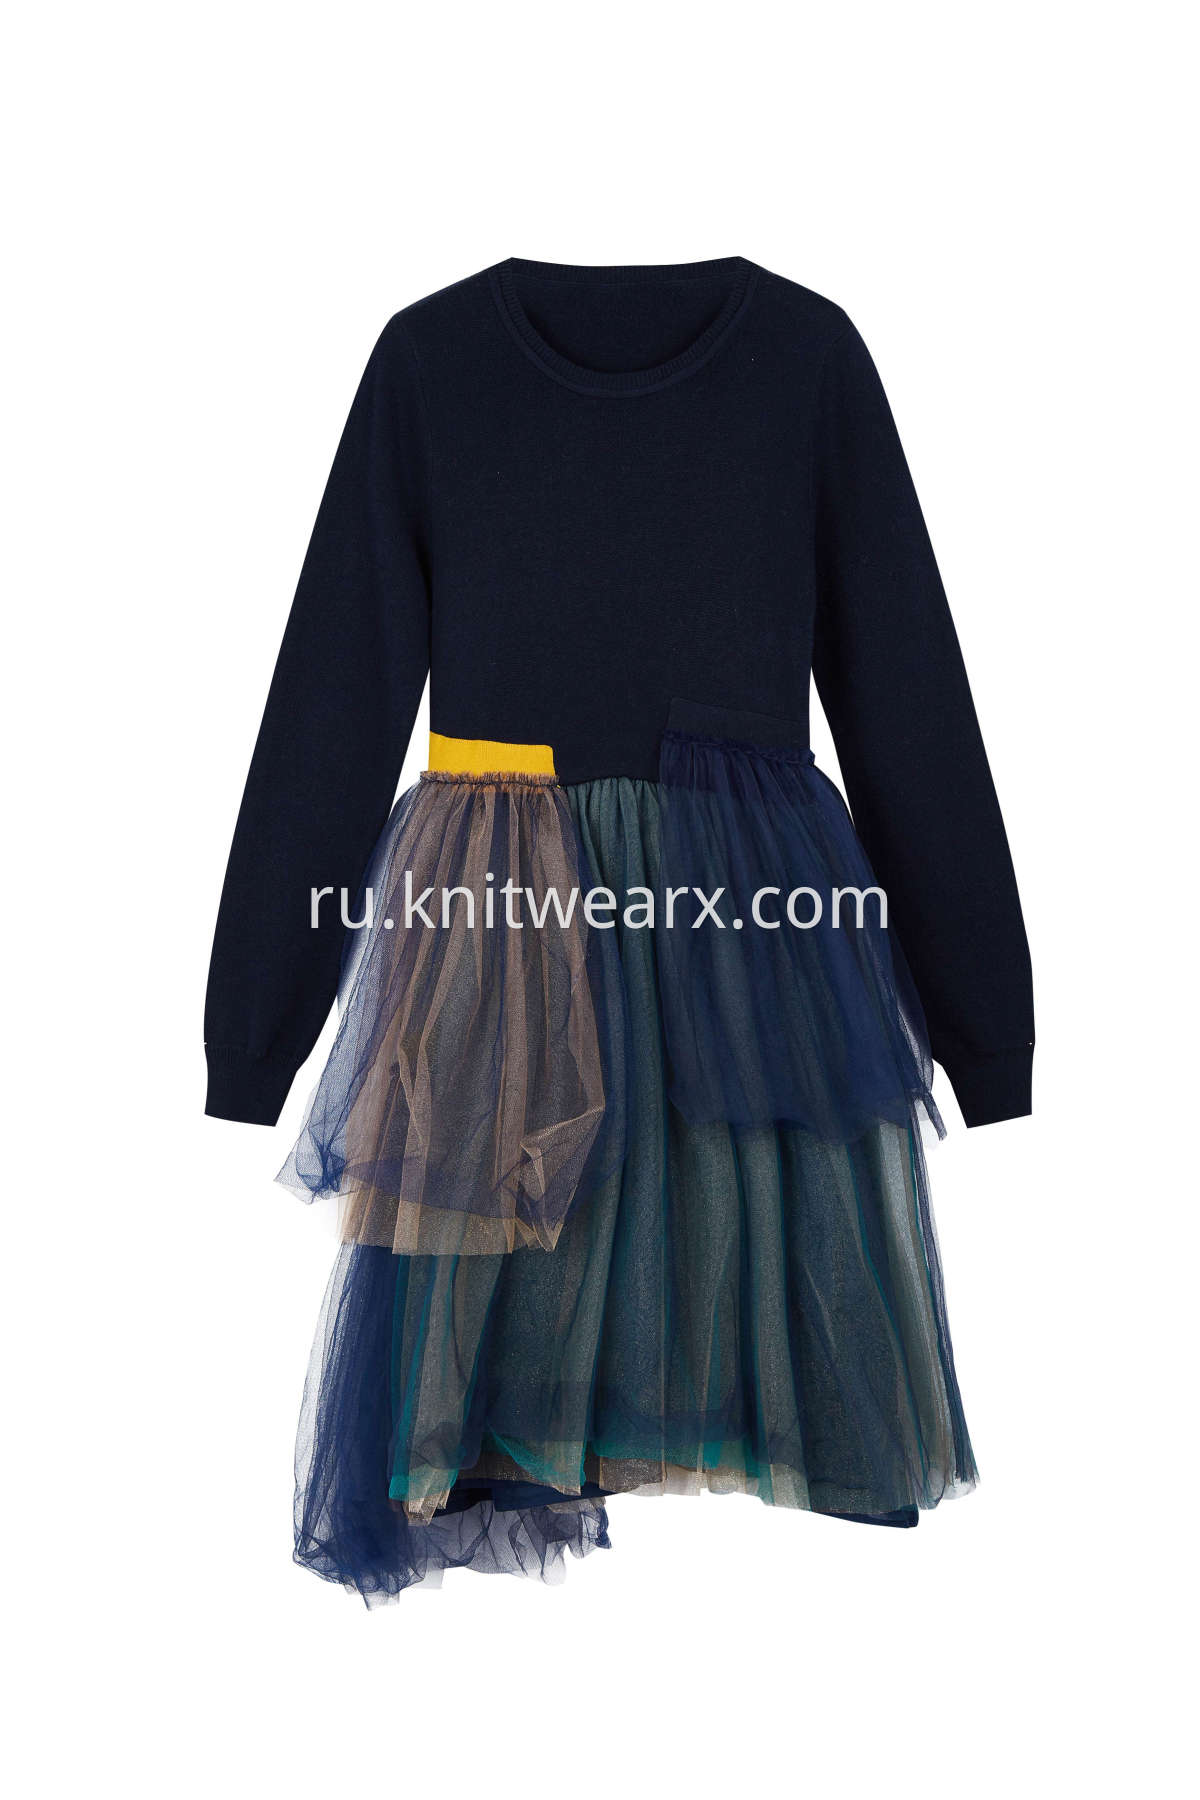 Girl's Fahion Party Sweater Dress Cotton Chiffon Skirt